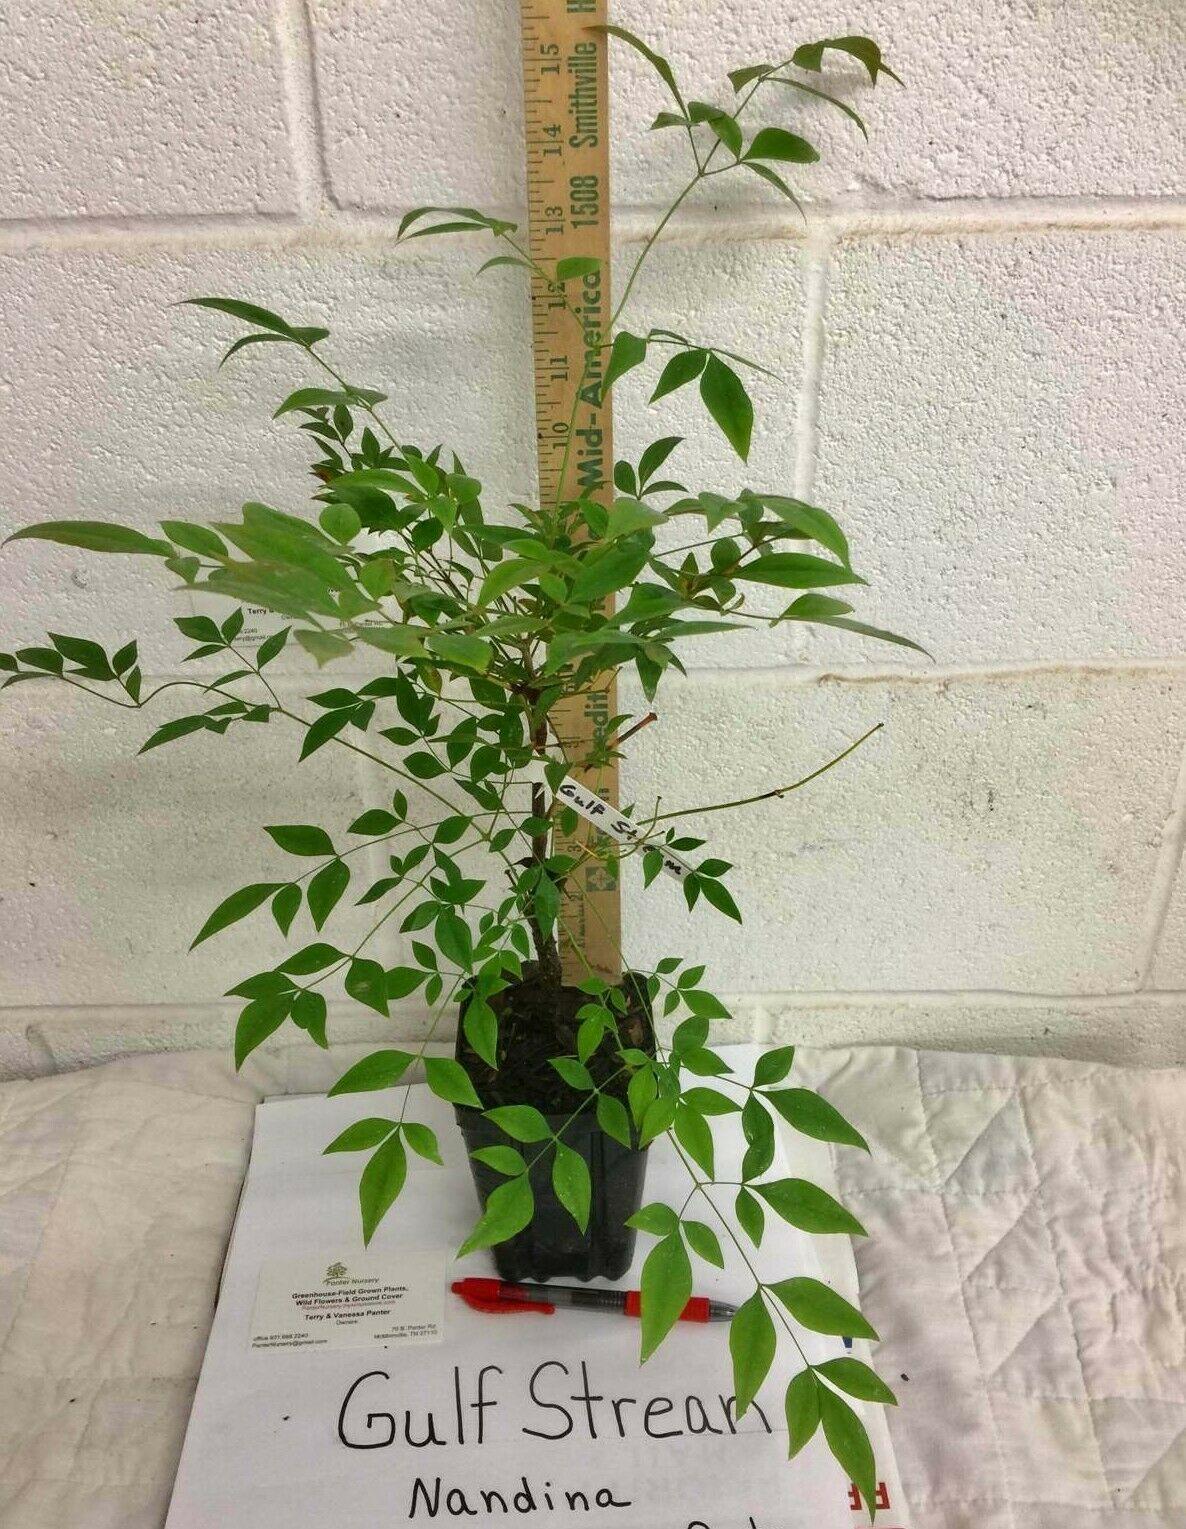 2 Gulf Stream Nandina domestica Shrubs - Live Plants - 6-12" Tall - Quart Pots - The Nursery Center